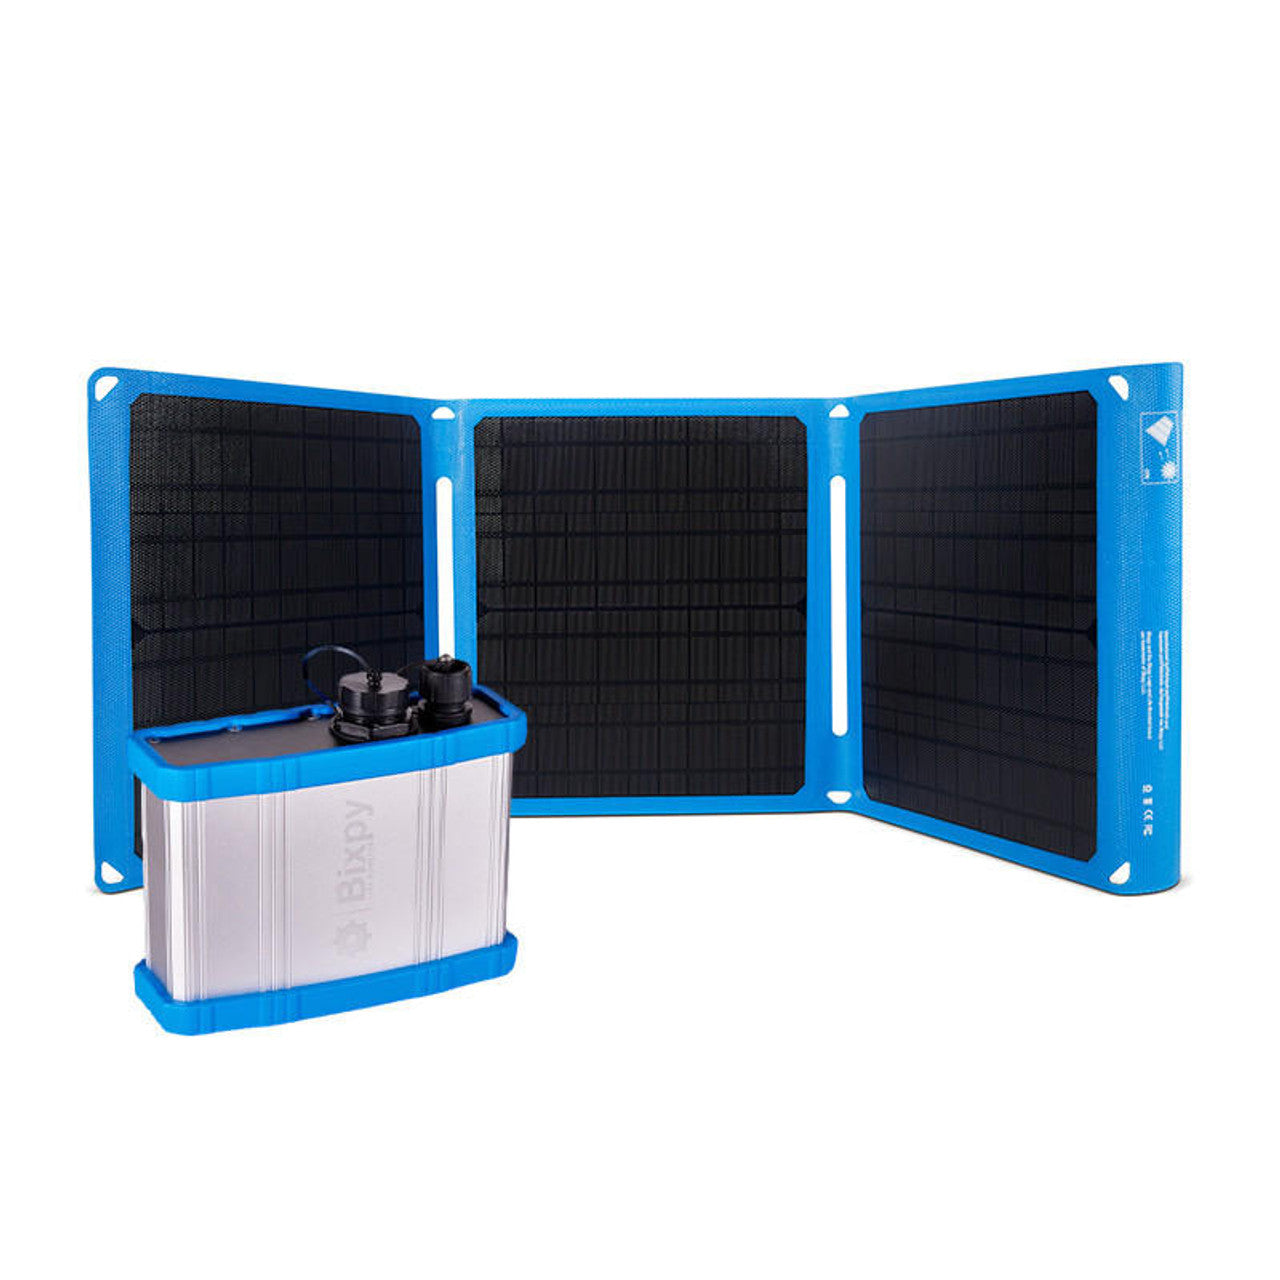 PP-77-AP Power Bank & SUN45 Solar Panel Bundle Kit